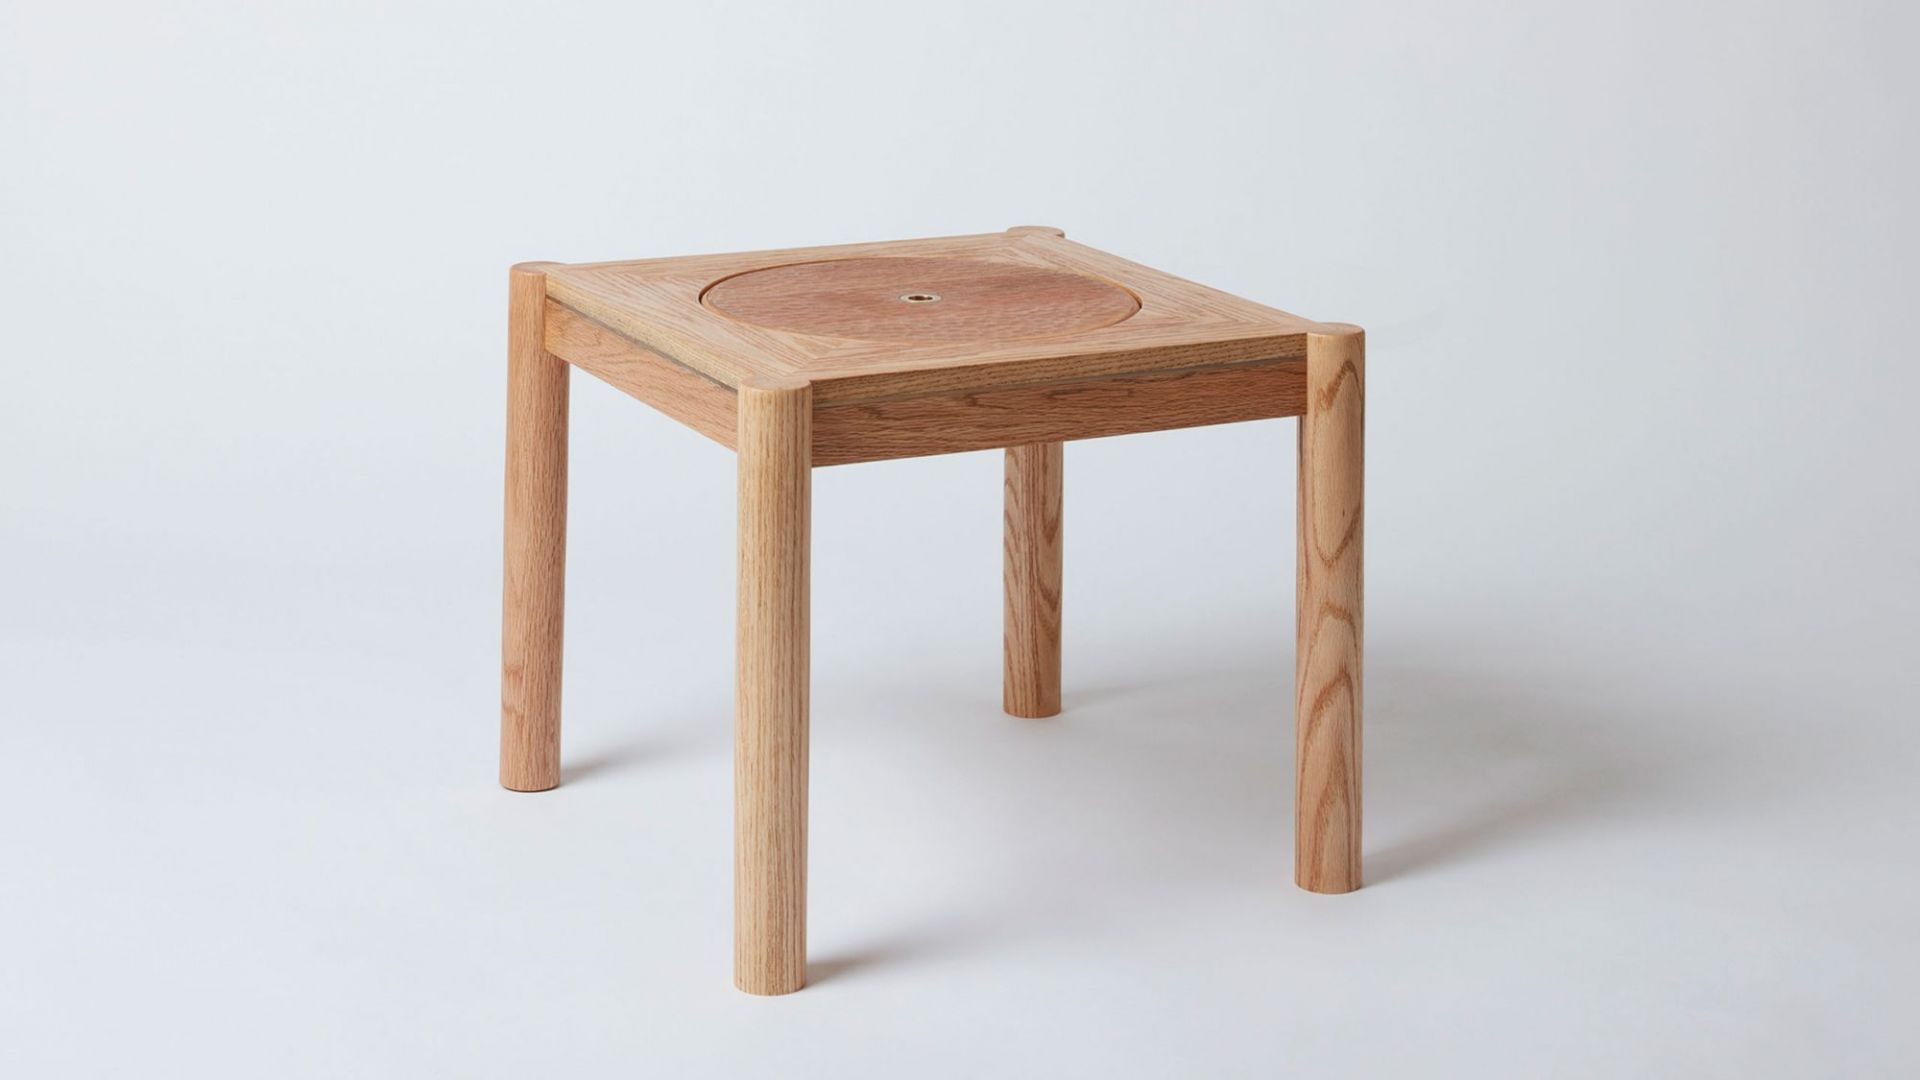 Użyteczny stół, projekt: Companion table, autor: Paul Wones. Fot. Building Crafts College (BCC)